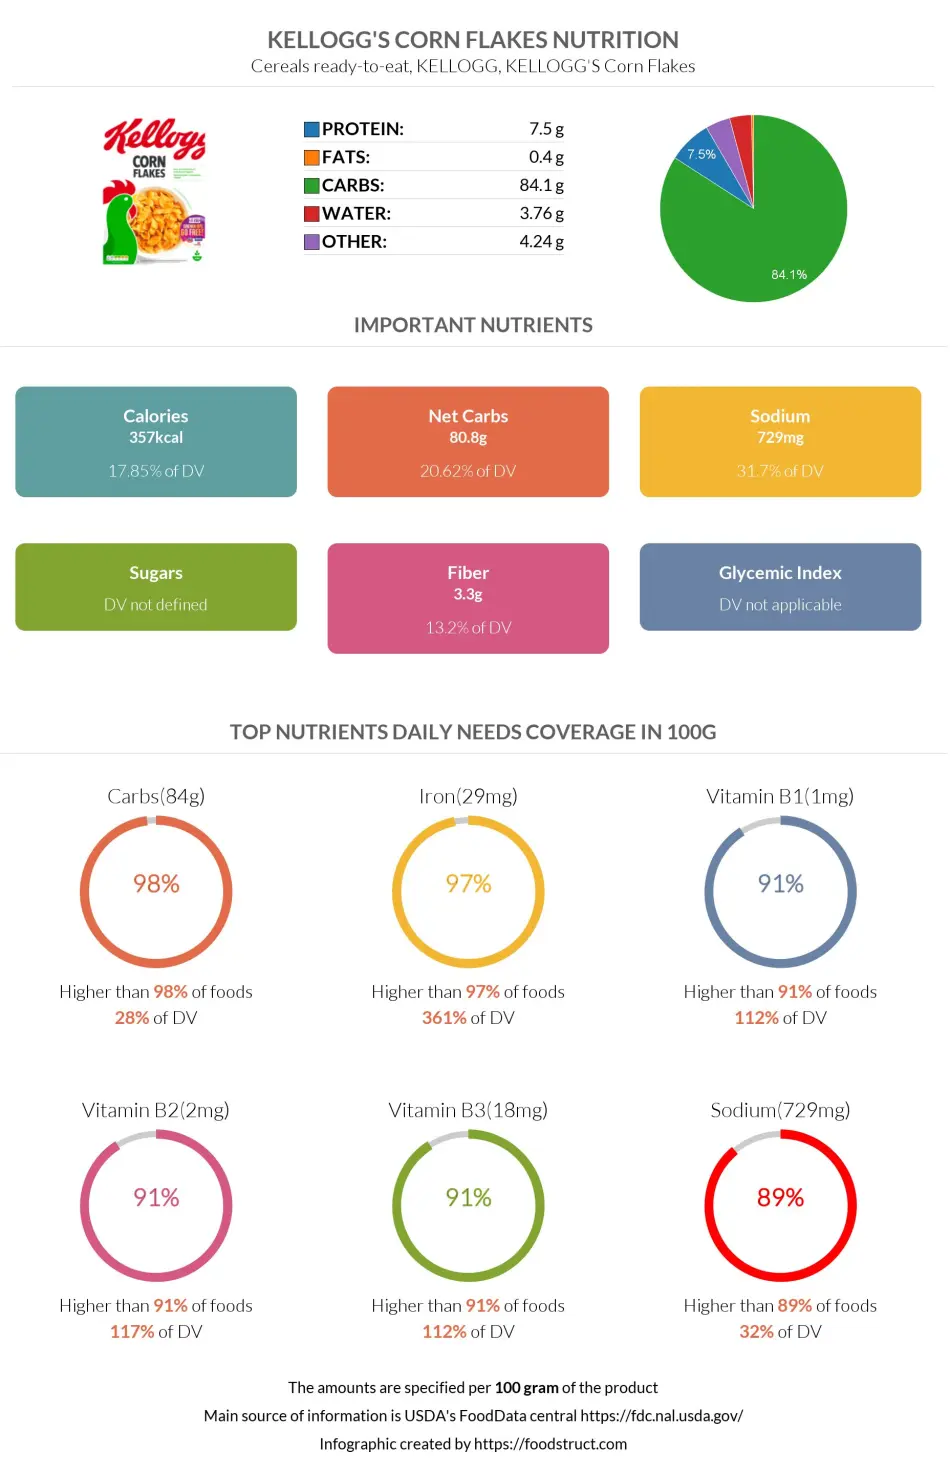 Kellogg's Corn Flakes nutrition infographic